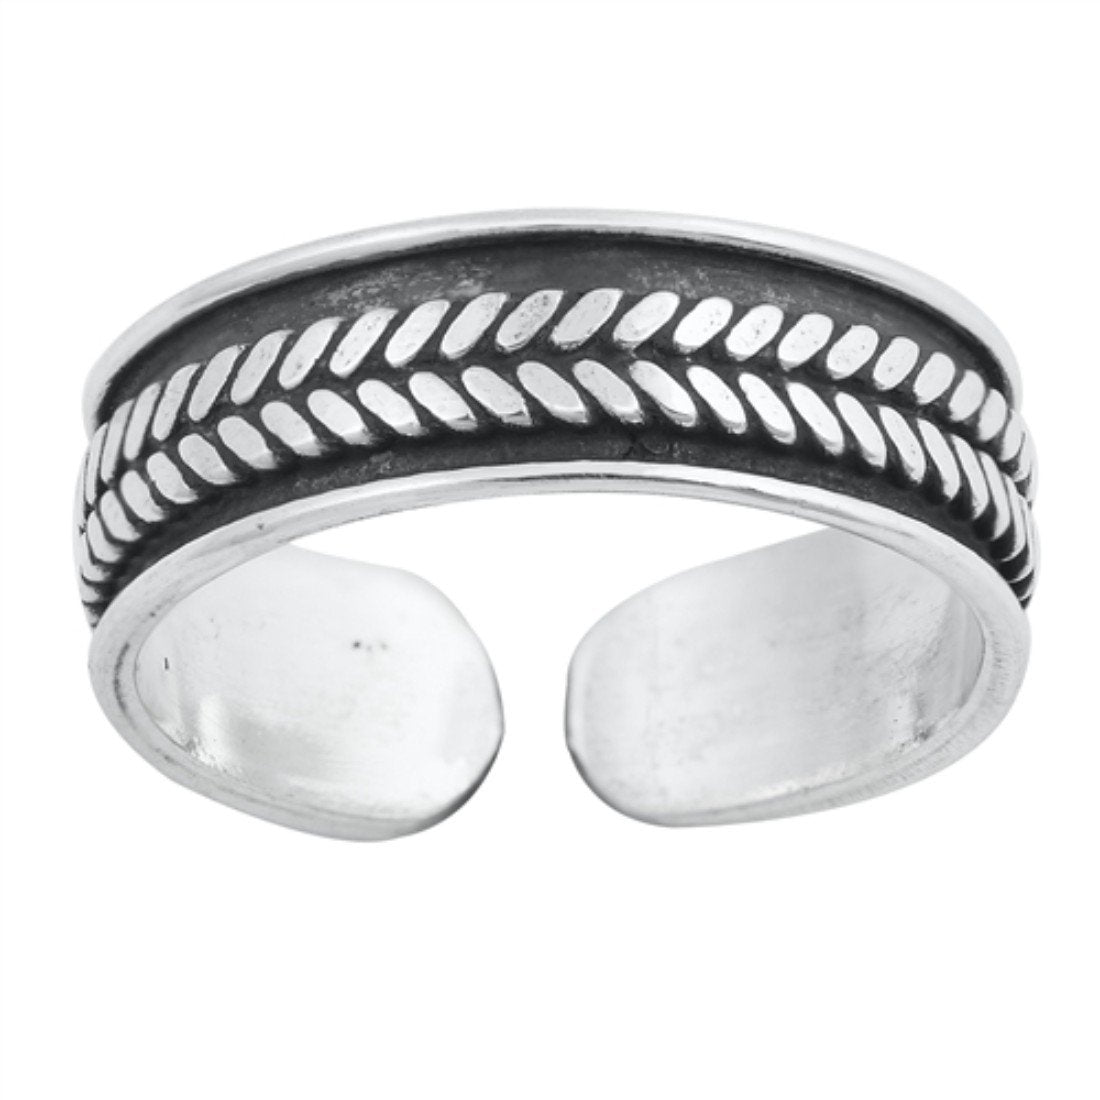 Bali Design Toe Ring Adjustable Band 925 Sterling Silver (5mm)